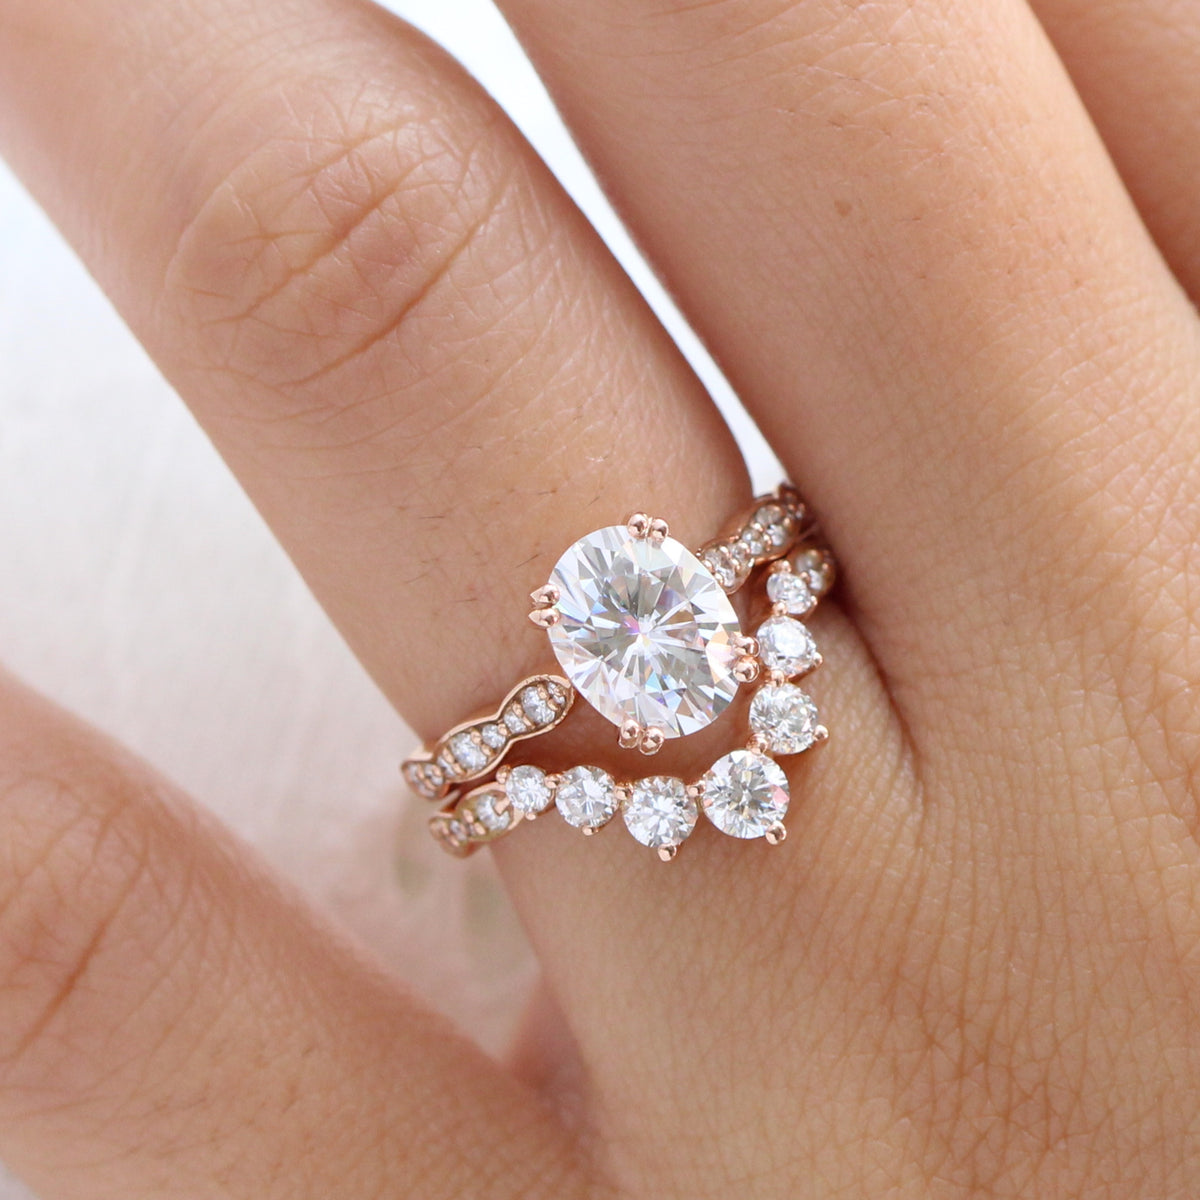 Oval moissanite diamond solitaire ring rose gold large diamond wedding band la more design jewelry